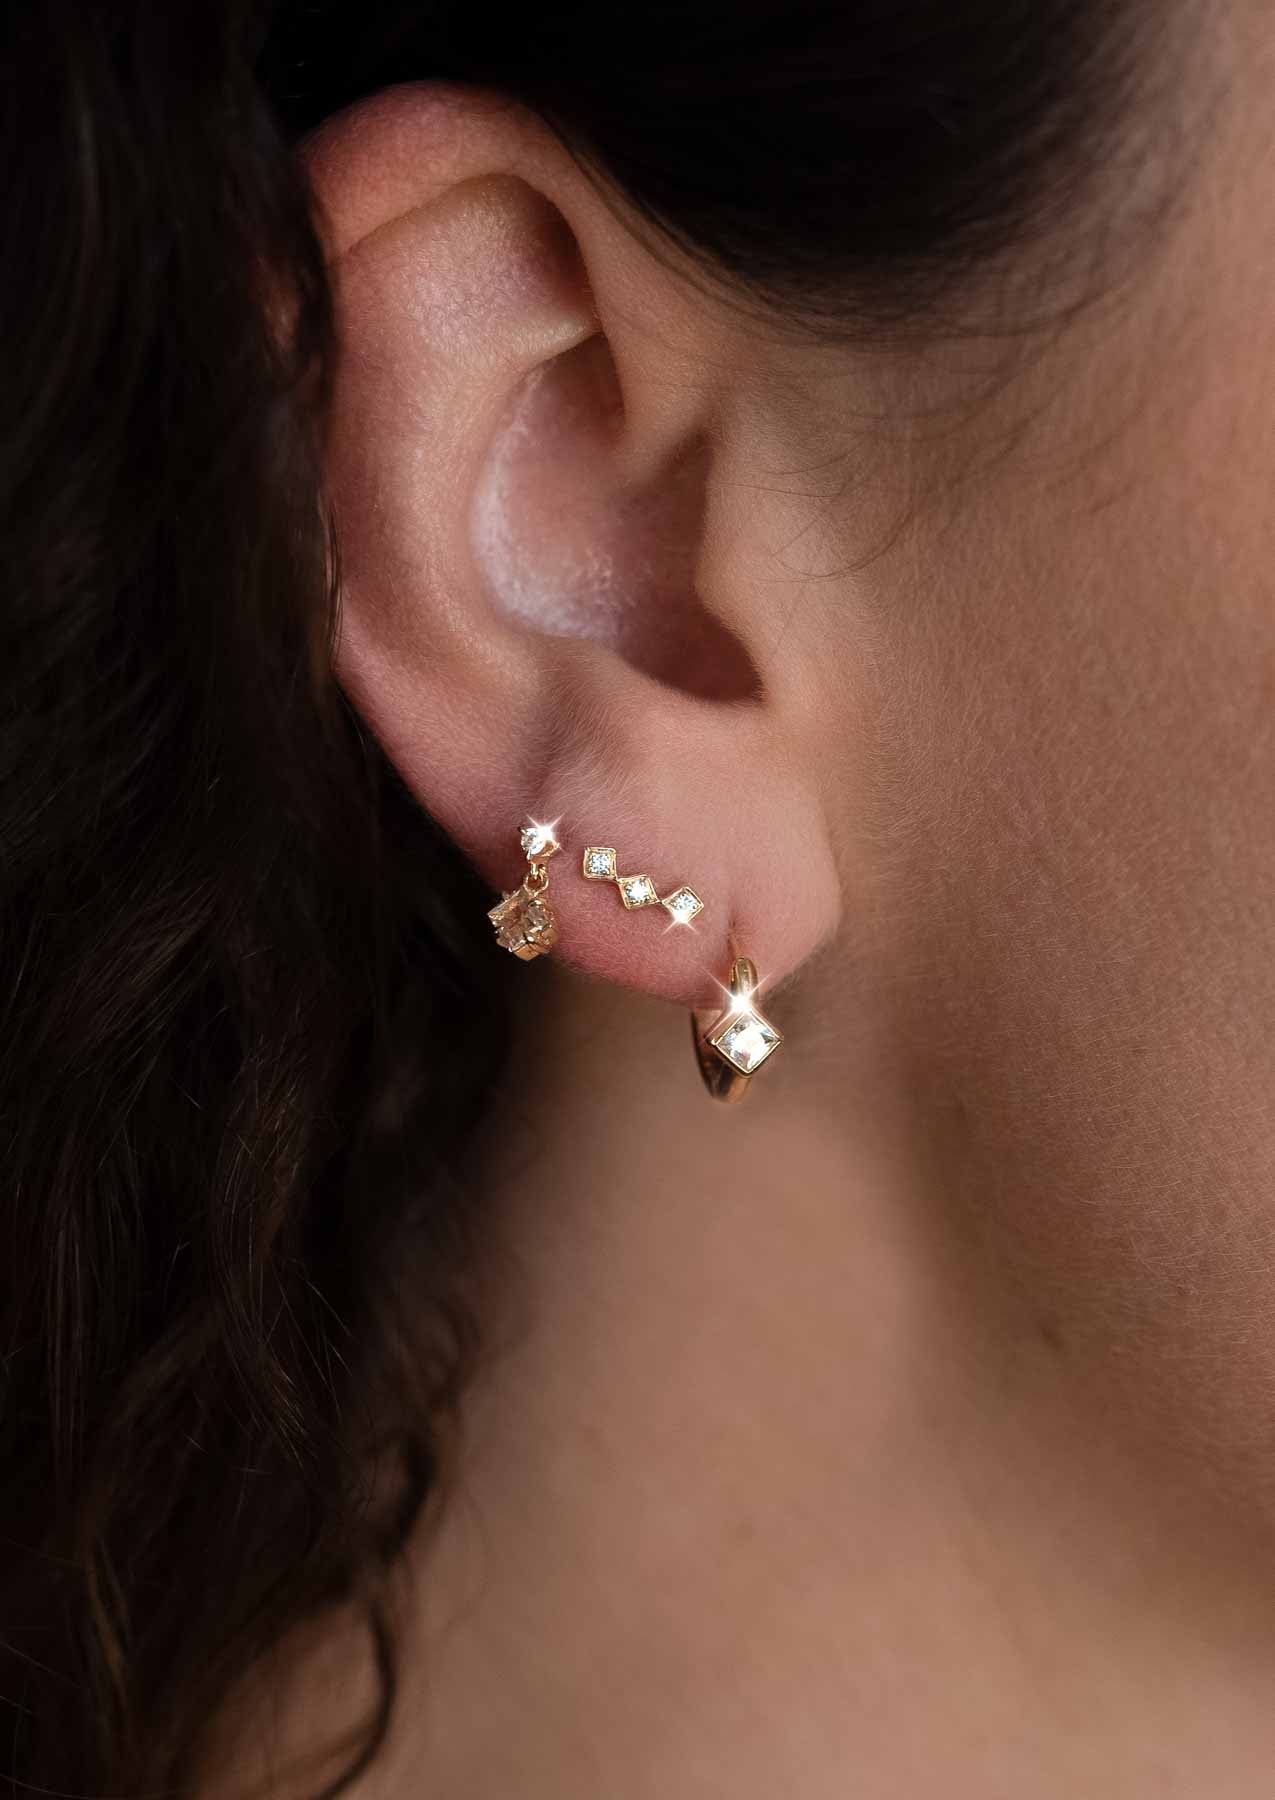 The Solid Gold Diamond Mini Climber Earrings